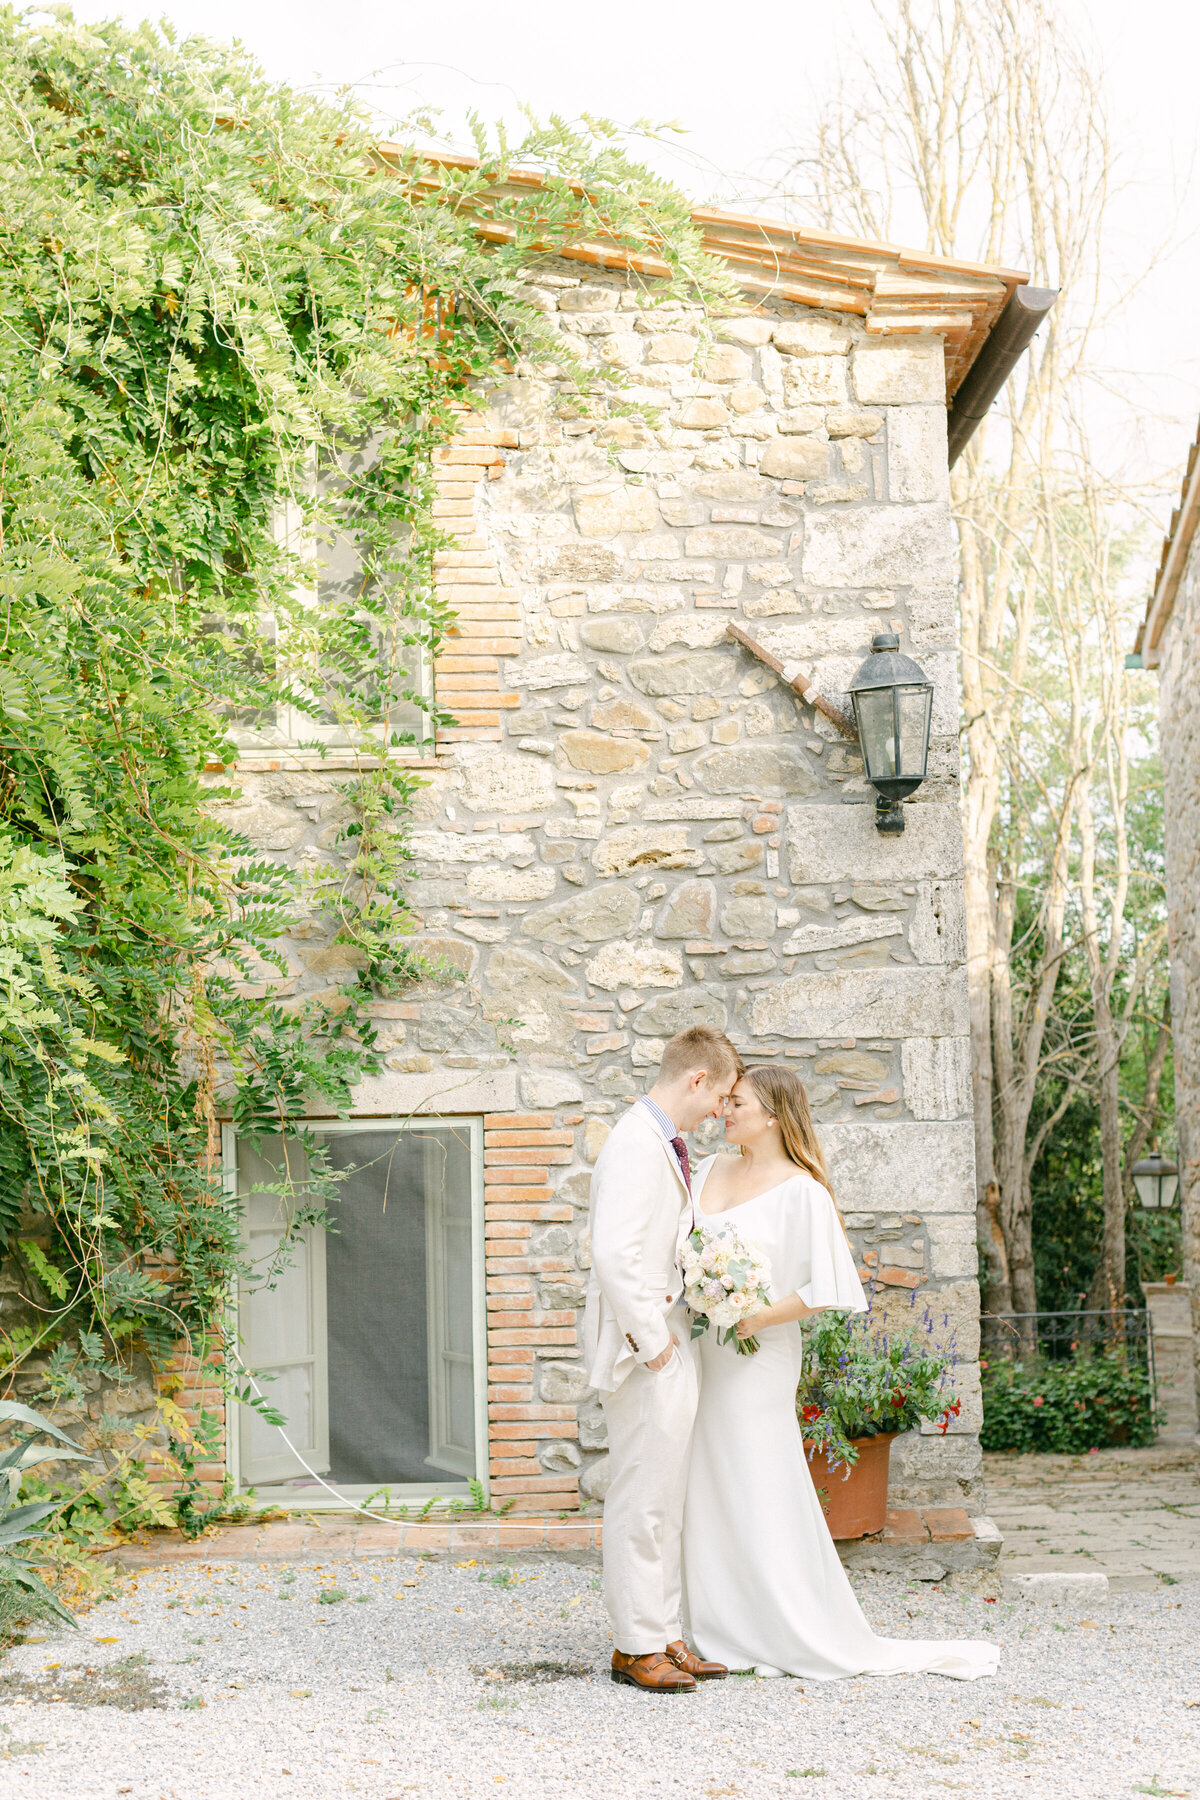 Borgo-Laticastelli-Italy-Wedding-Photographer-Ava-Vienneau-133